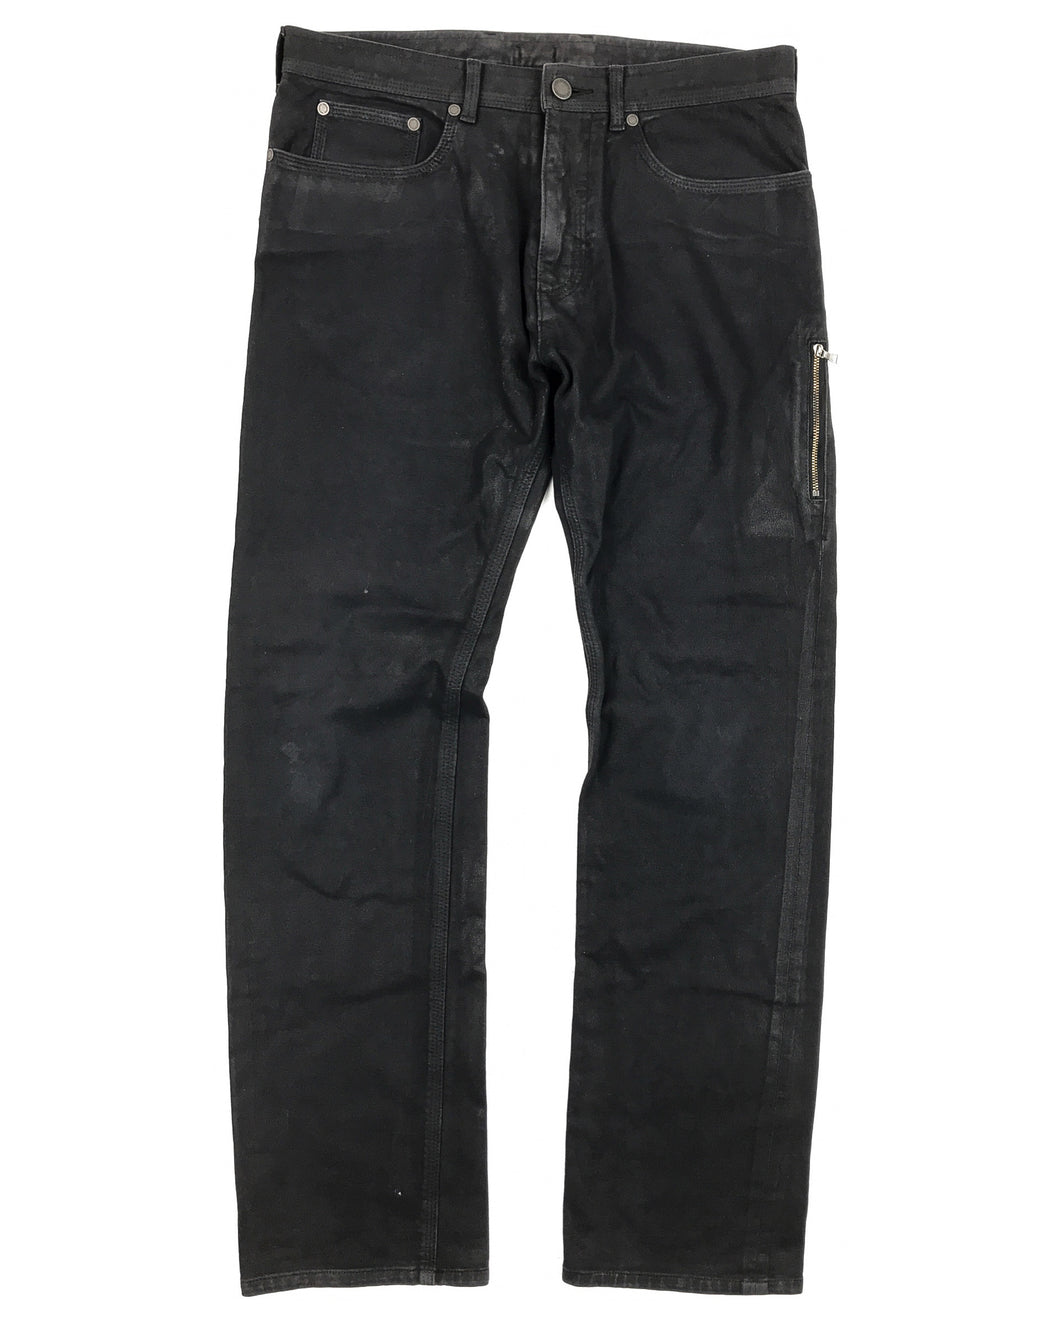 NEIL BARRETT Waxed Denim Jeans (AW2009)